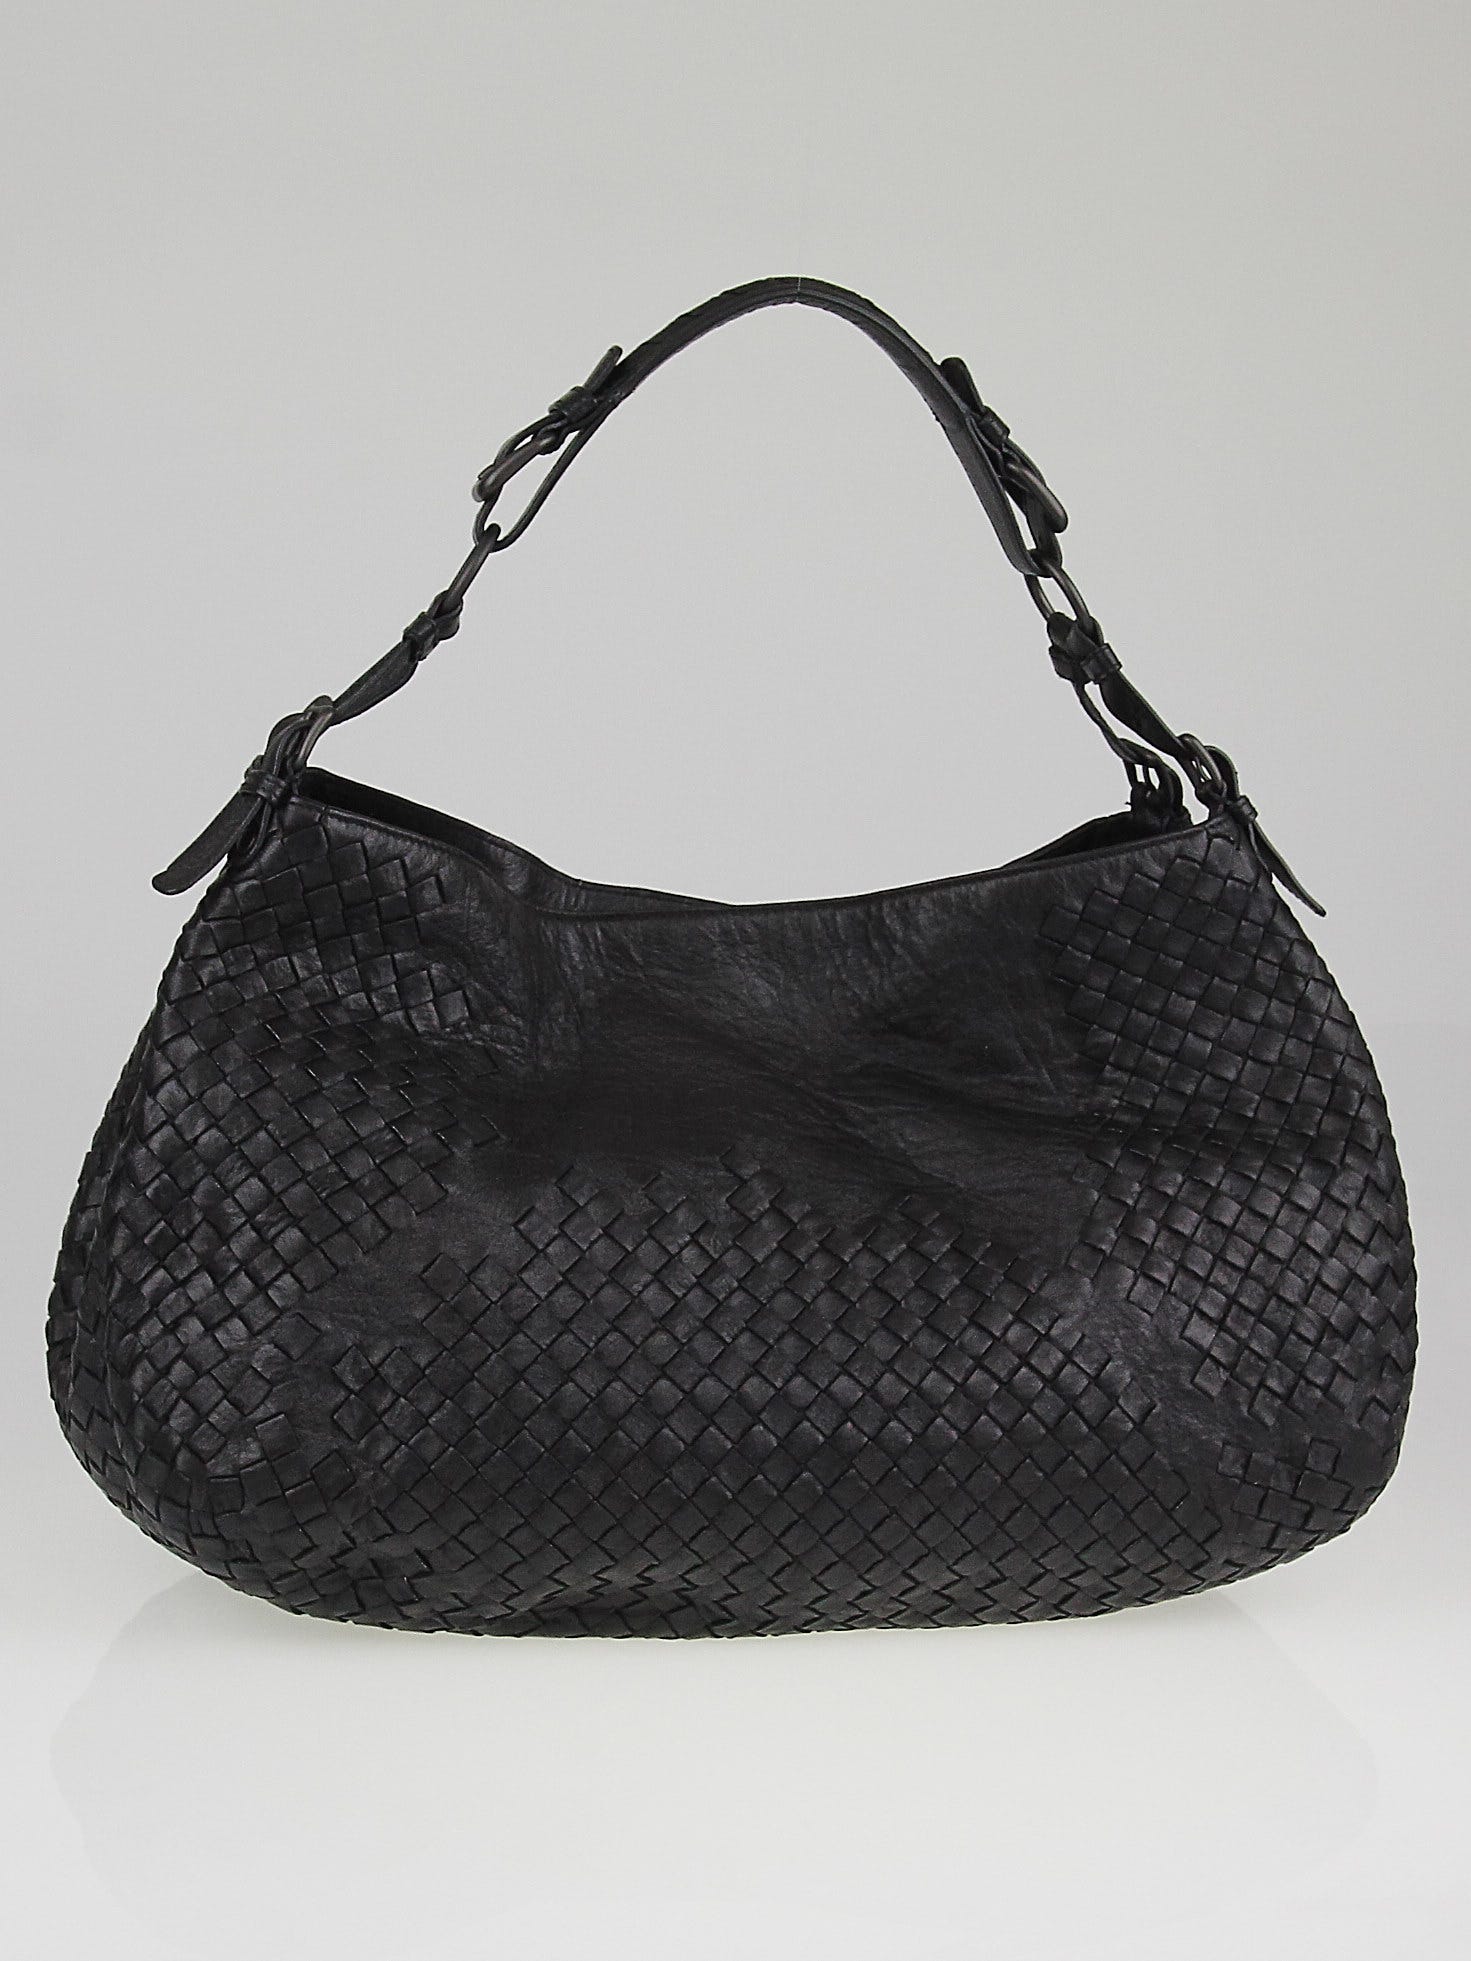 PRADA Italy Black Nero Nappa Leather Shopping Bag, Handbag,Buckles, Silver  trims | eBay